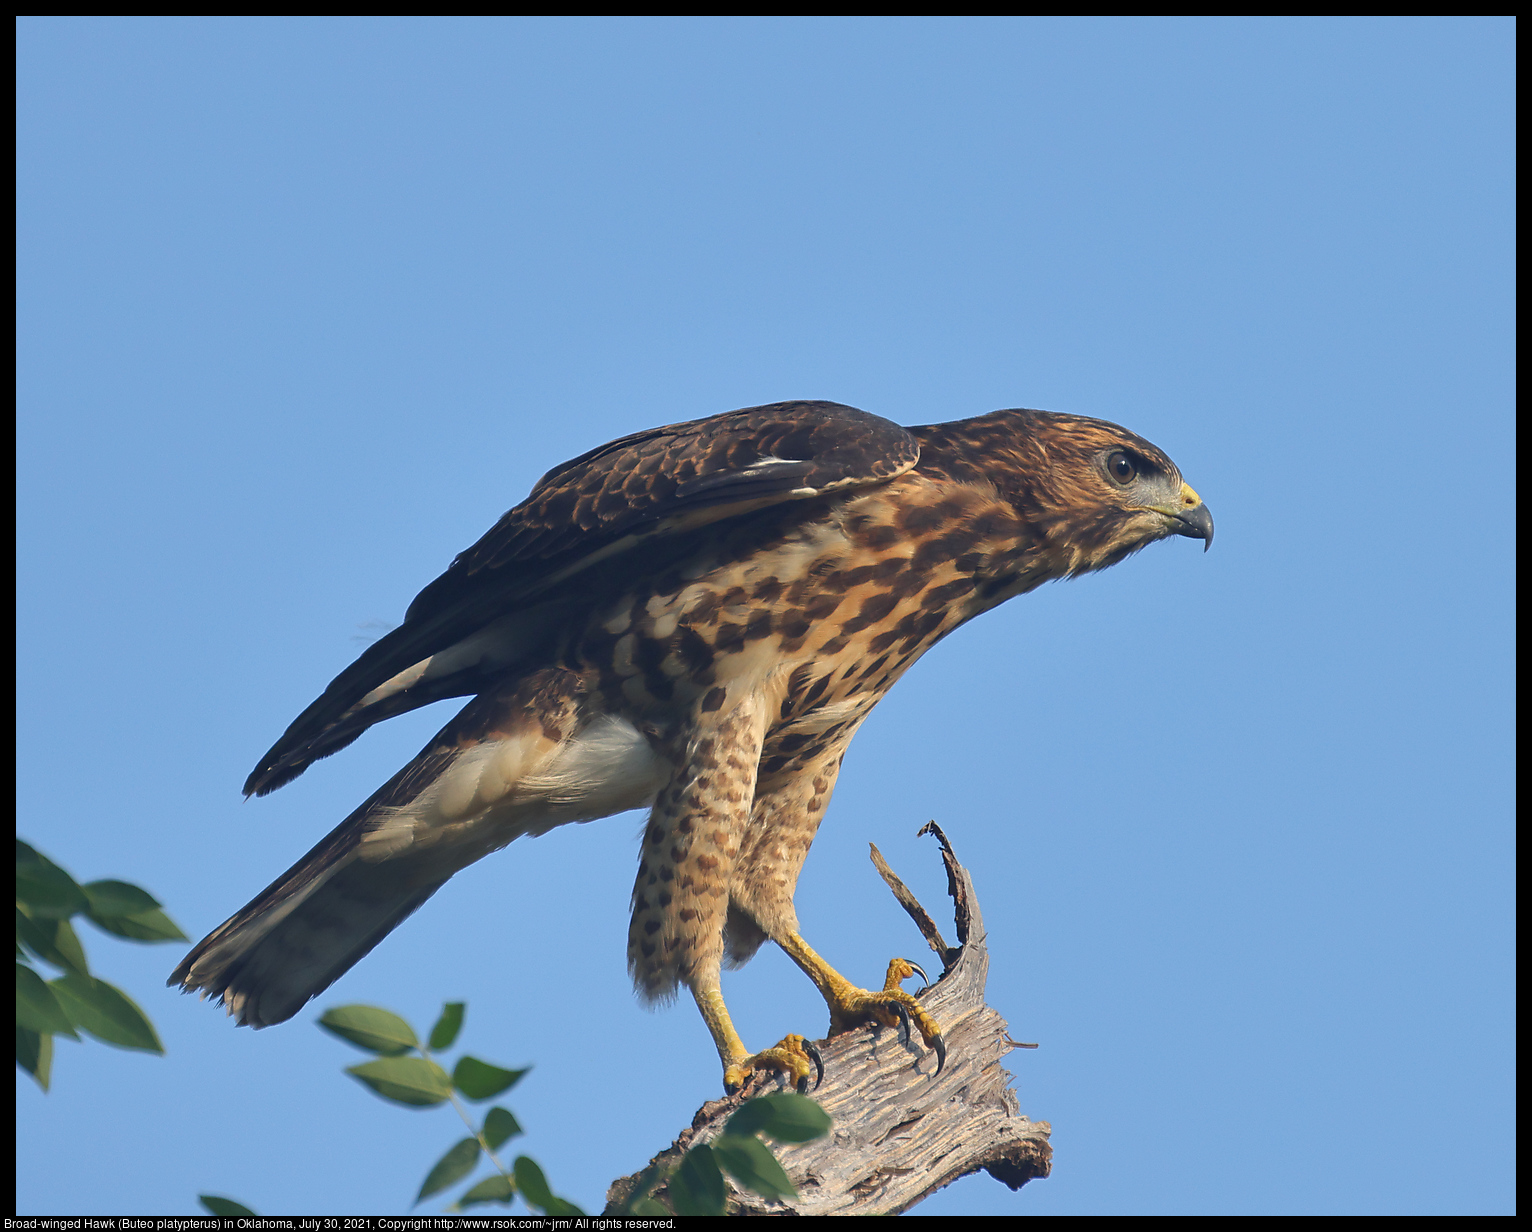 Broad-winged Hawk (Buteo platypterus) in Oklahoma, July 30, 2021